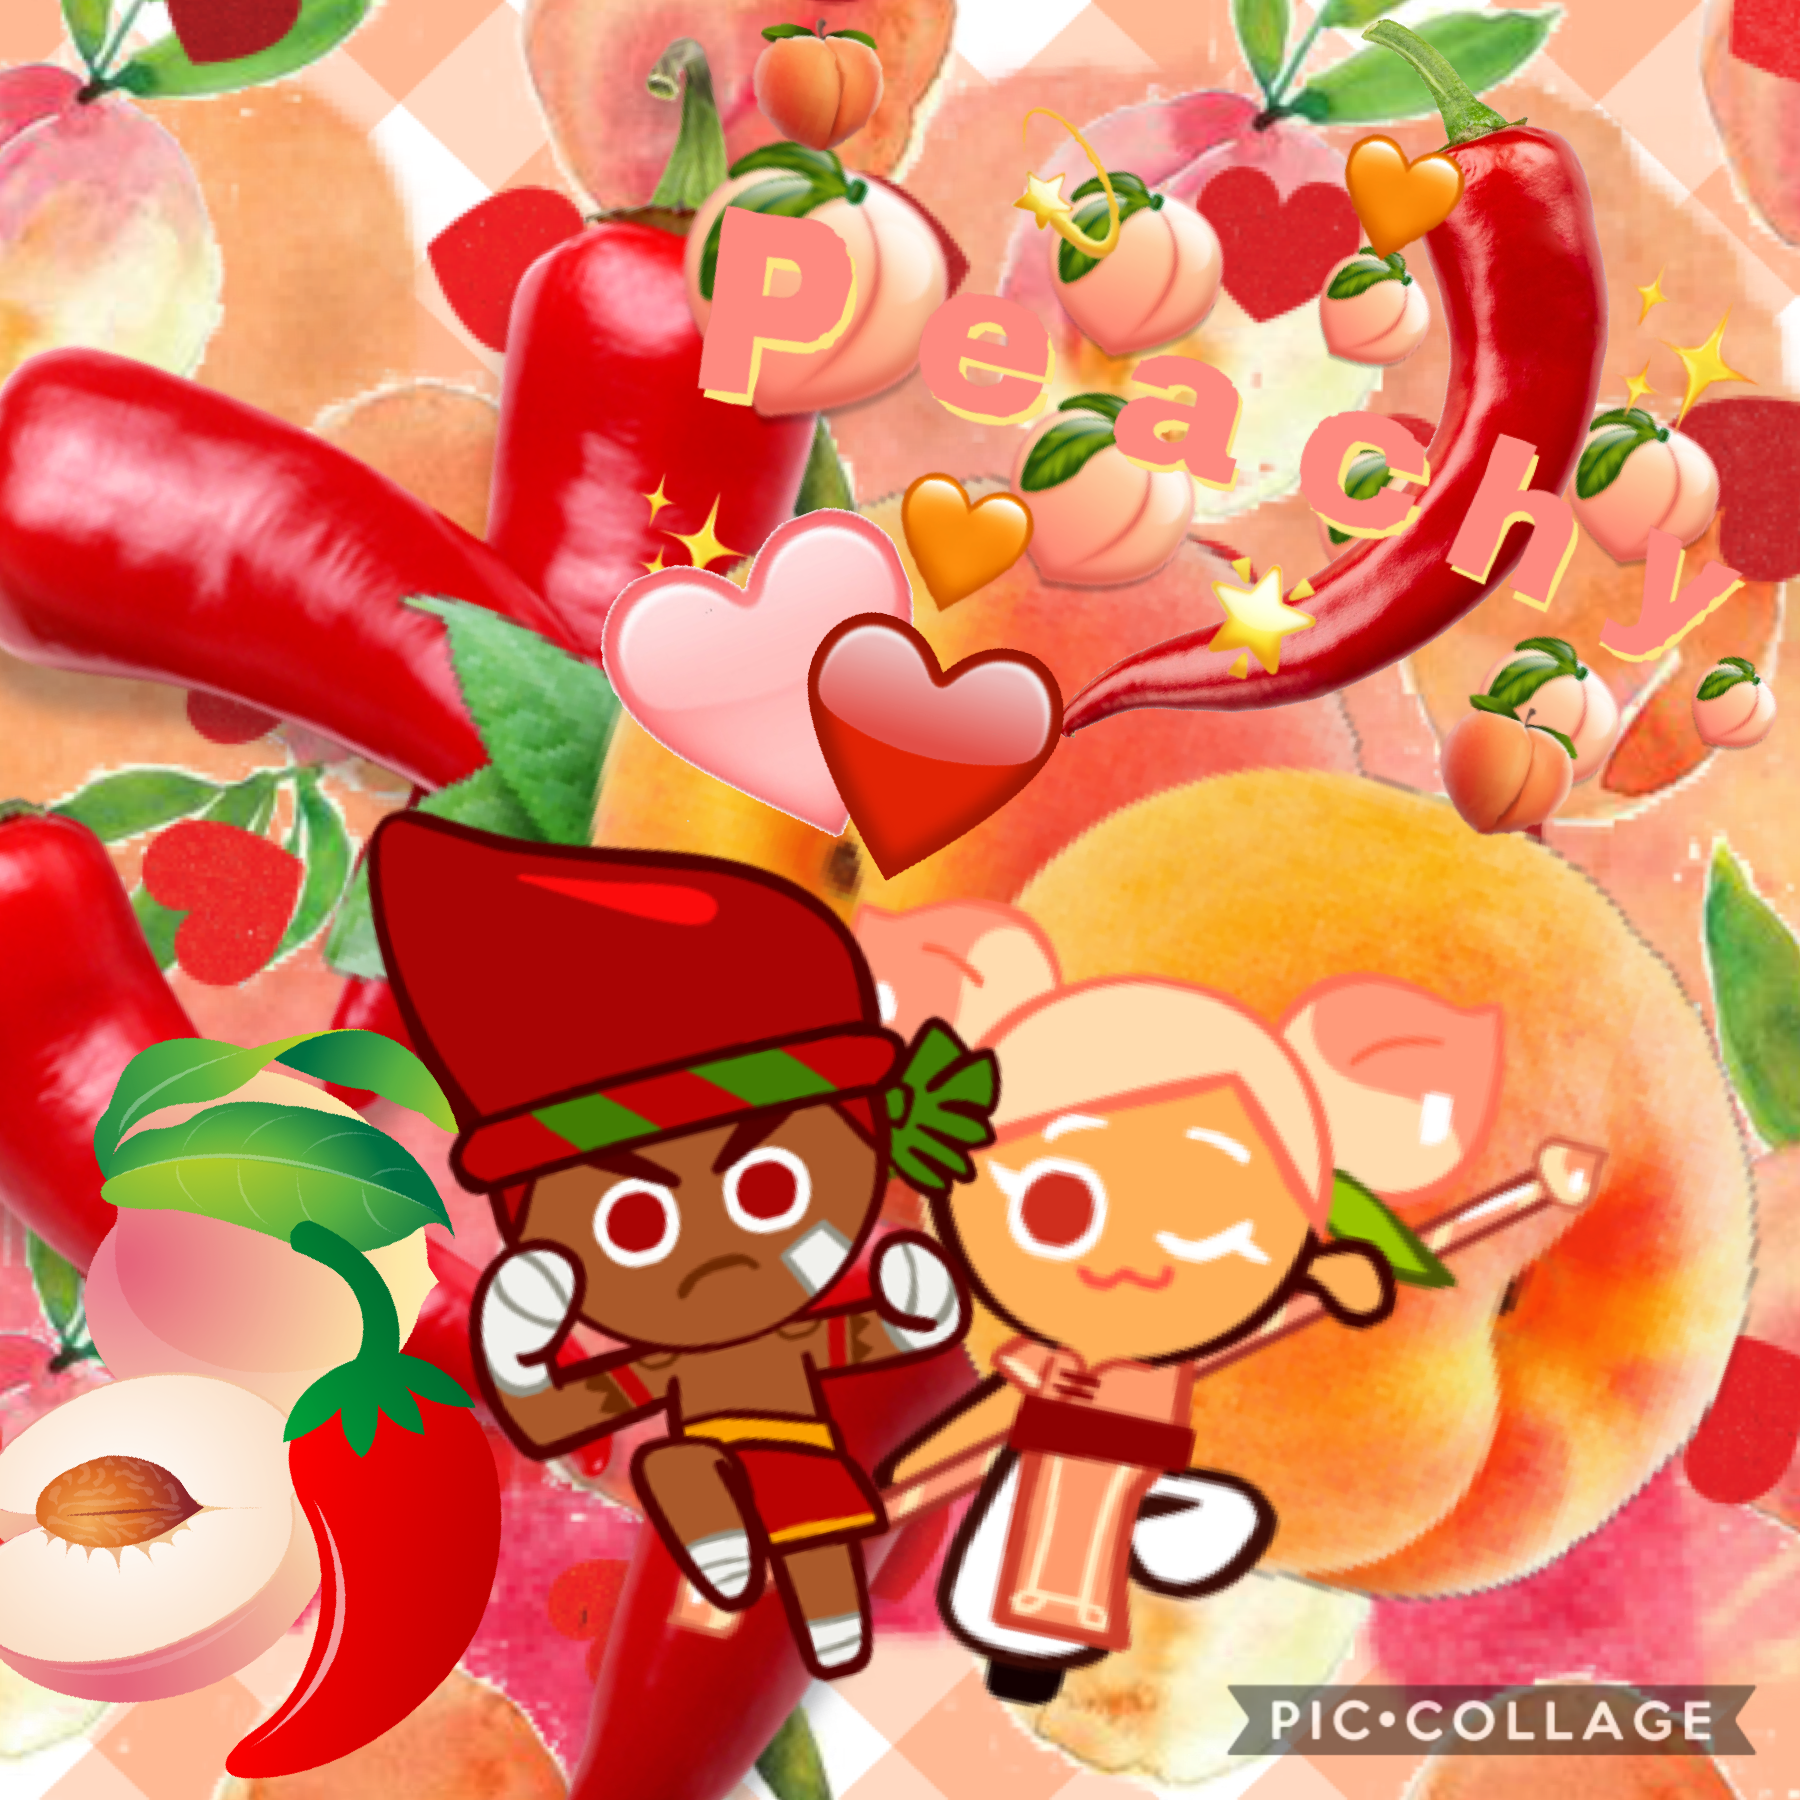 Red Pepper Cookie x Peach Cookie🍑🌶